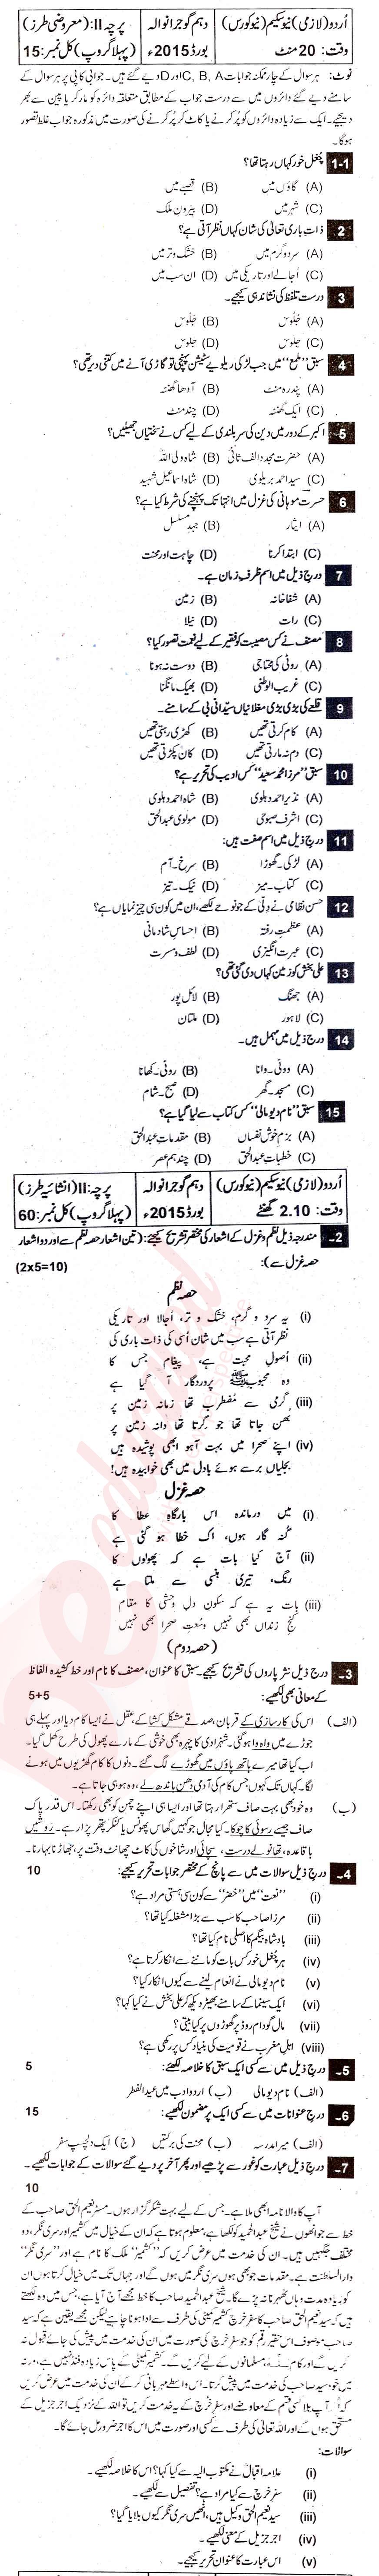 Urdu 10th class Past Paper Group 1 BISE Gujranwala 2015